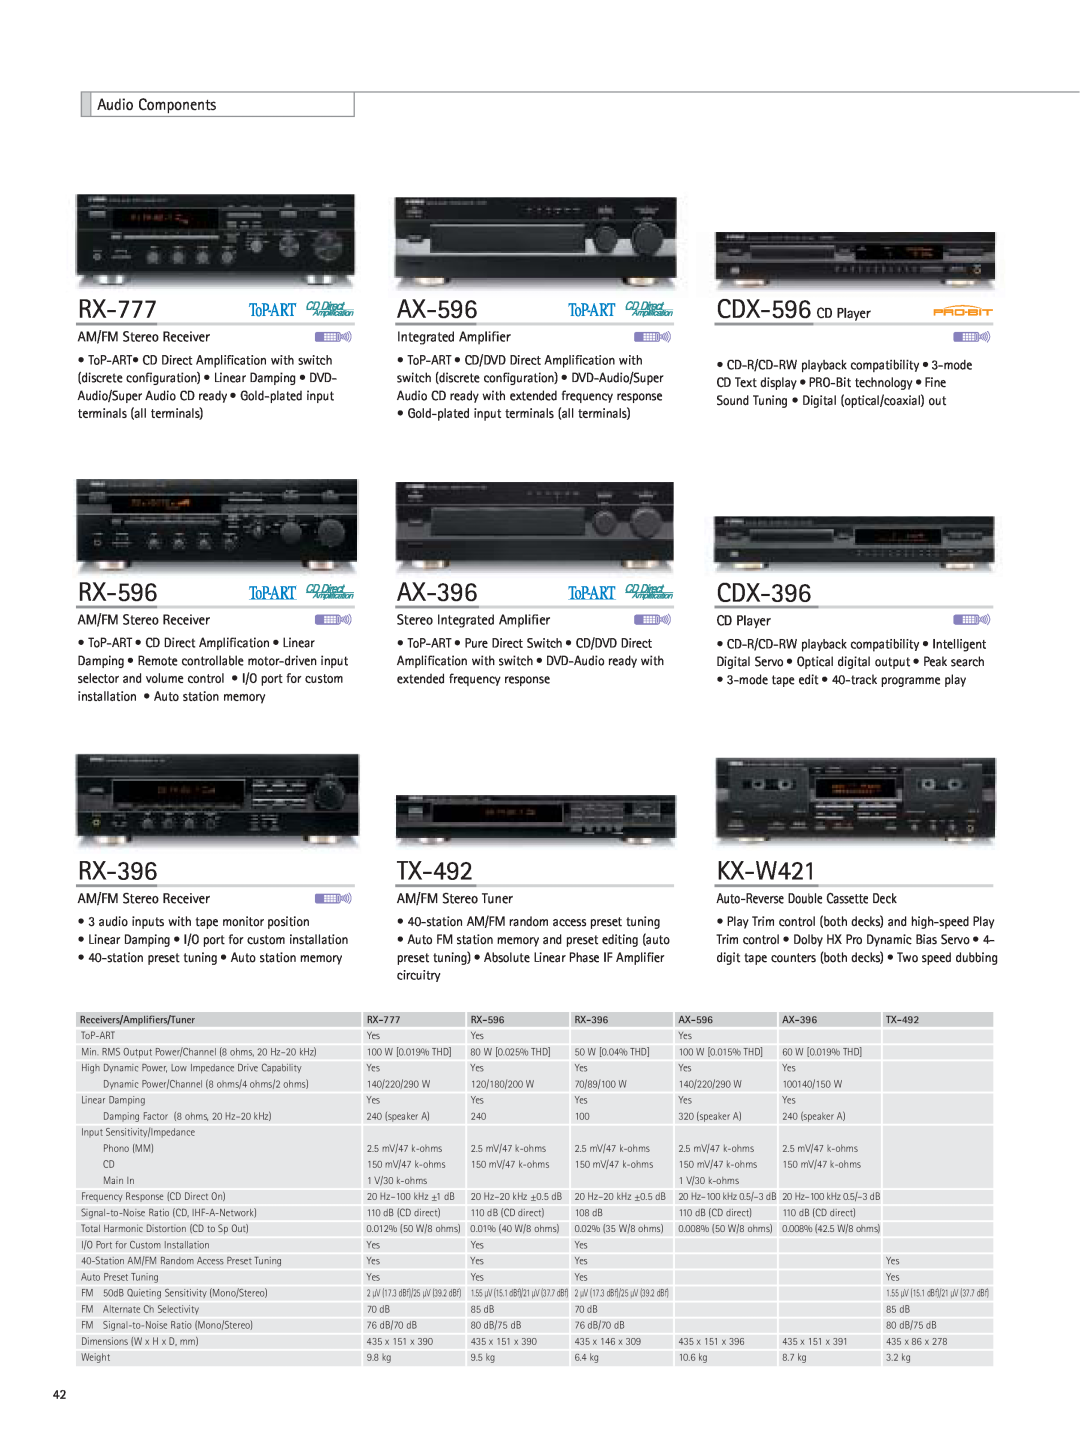 Yamaha RX-Z9 RX-777, AX-596, RX-596, RX-396, AX-396, TX-492, CDX-396, KX-W421, Audio Components, AM/FM Stereo Receiver 